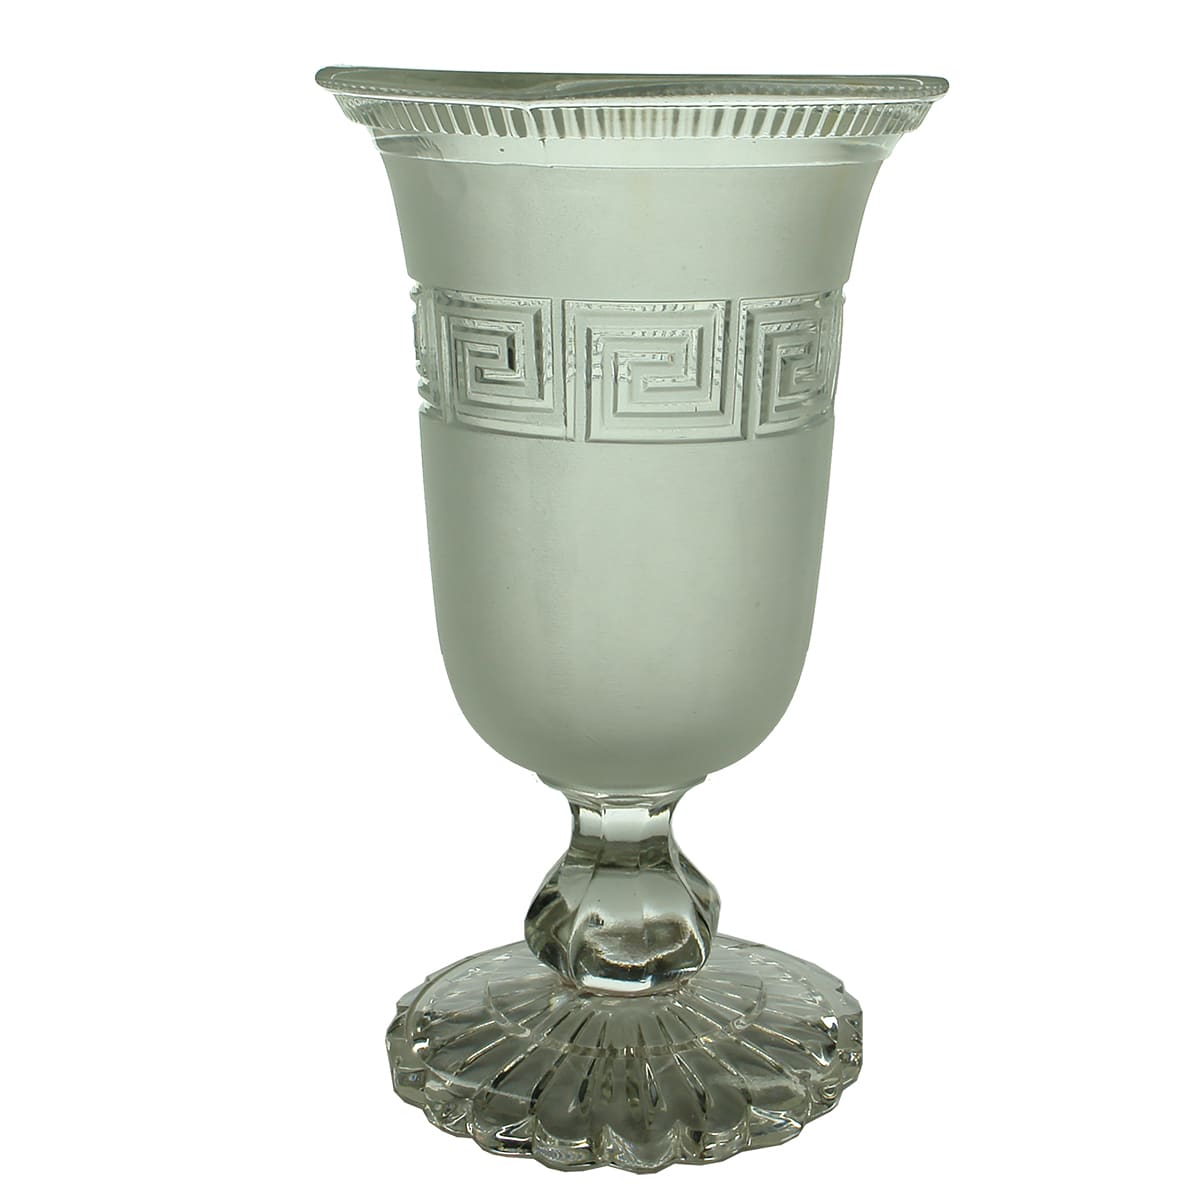 Glassware. Celery Vase, Molineaux Webb & Co, Manchester, 1865.